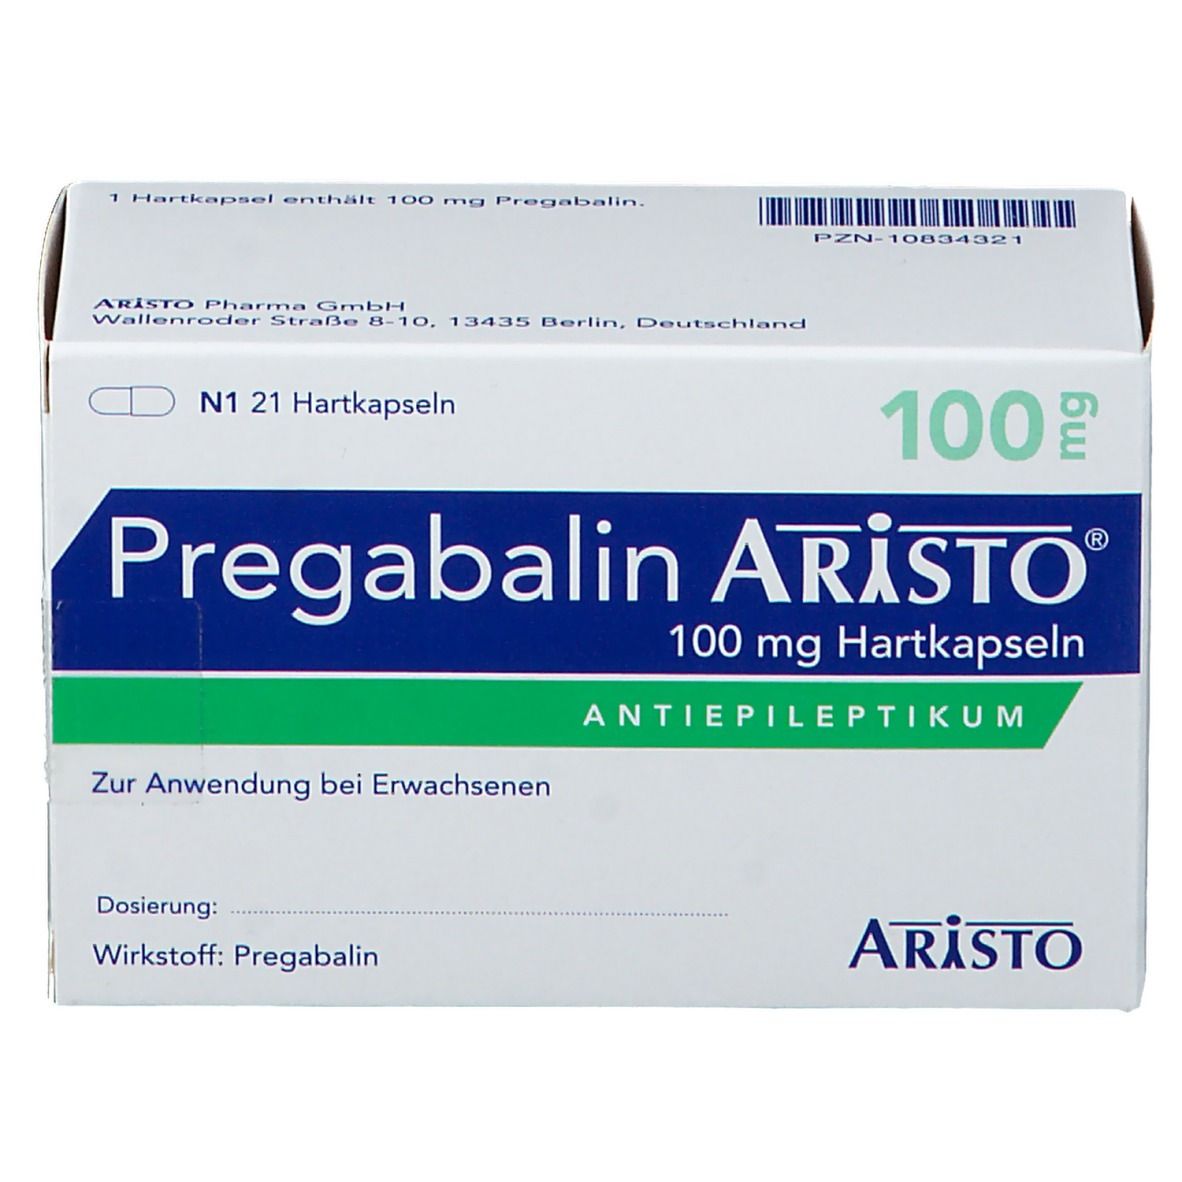 Pregabalin Aristo® 100 mg